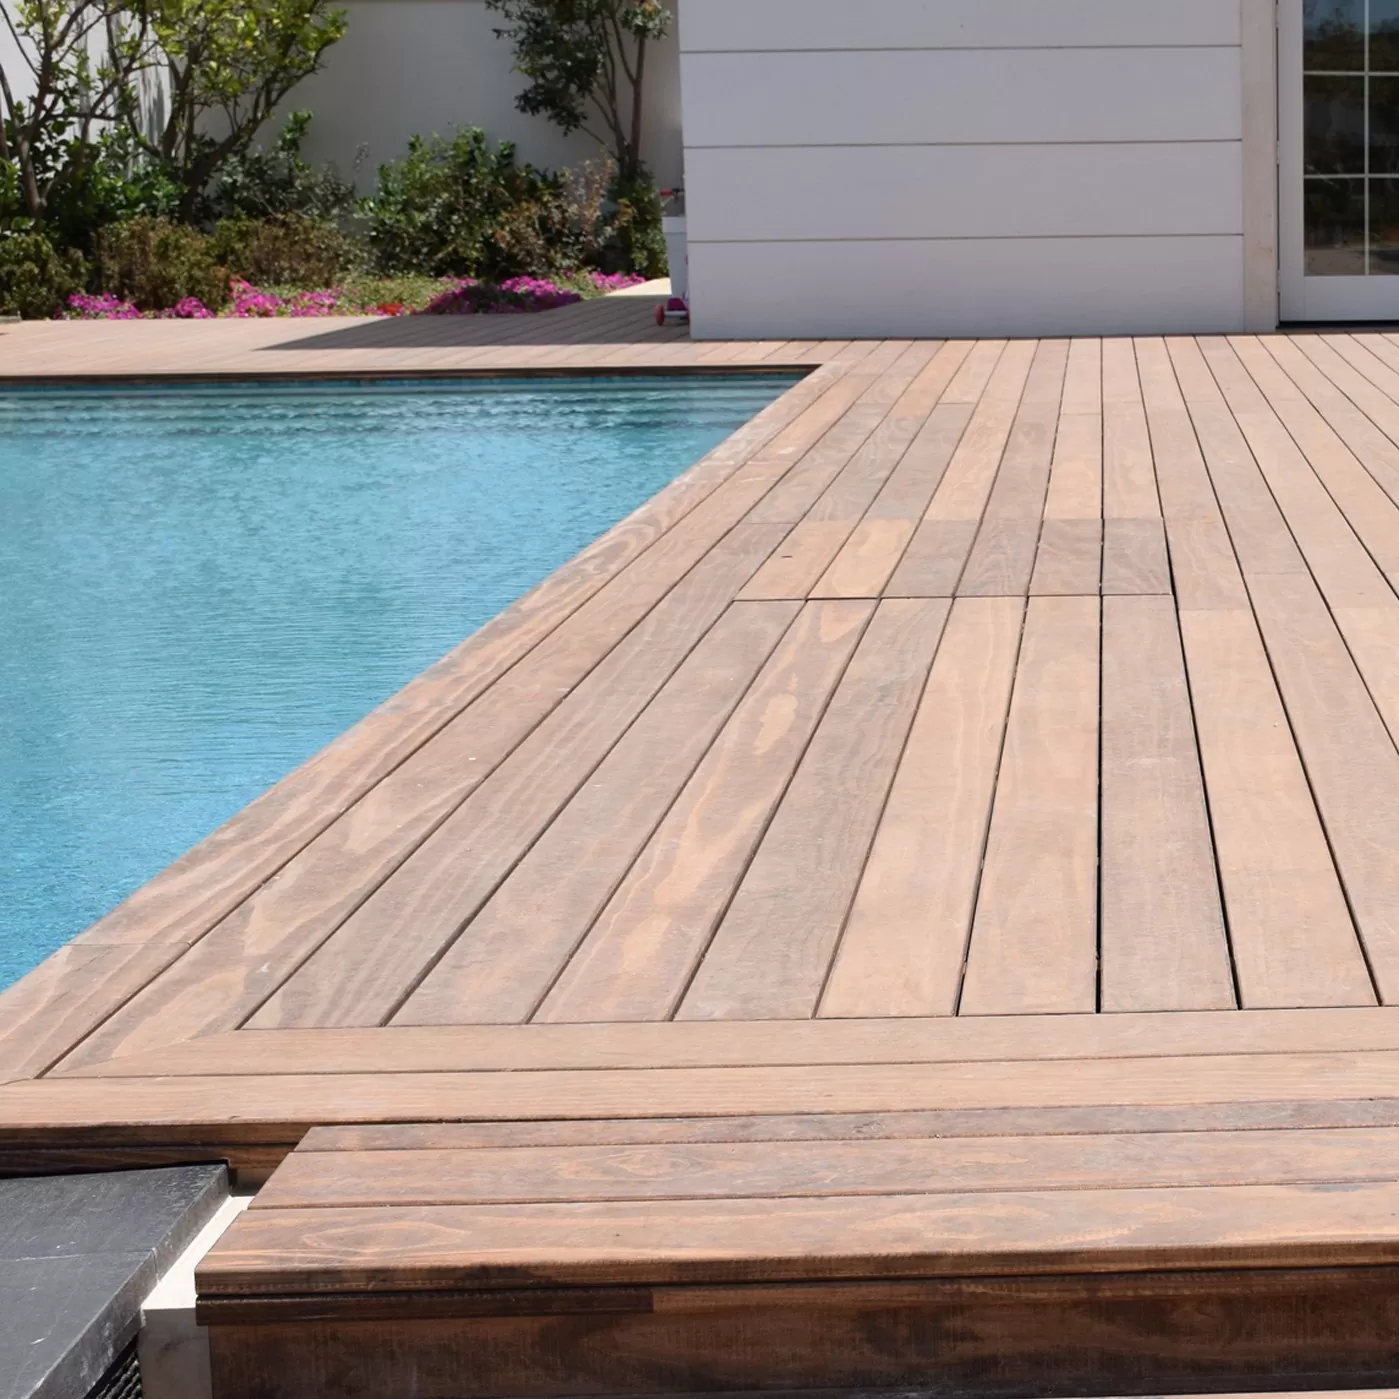 Dark coated swimming pool wood deck design